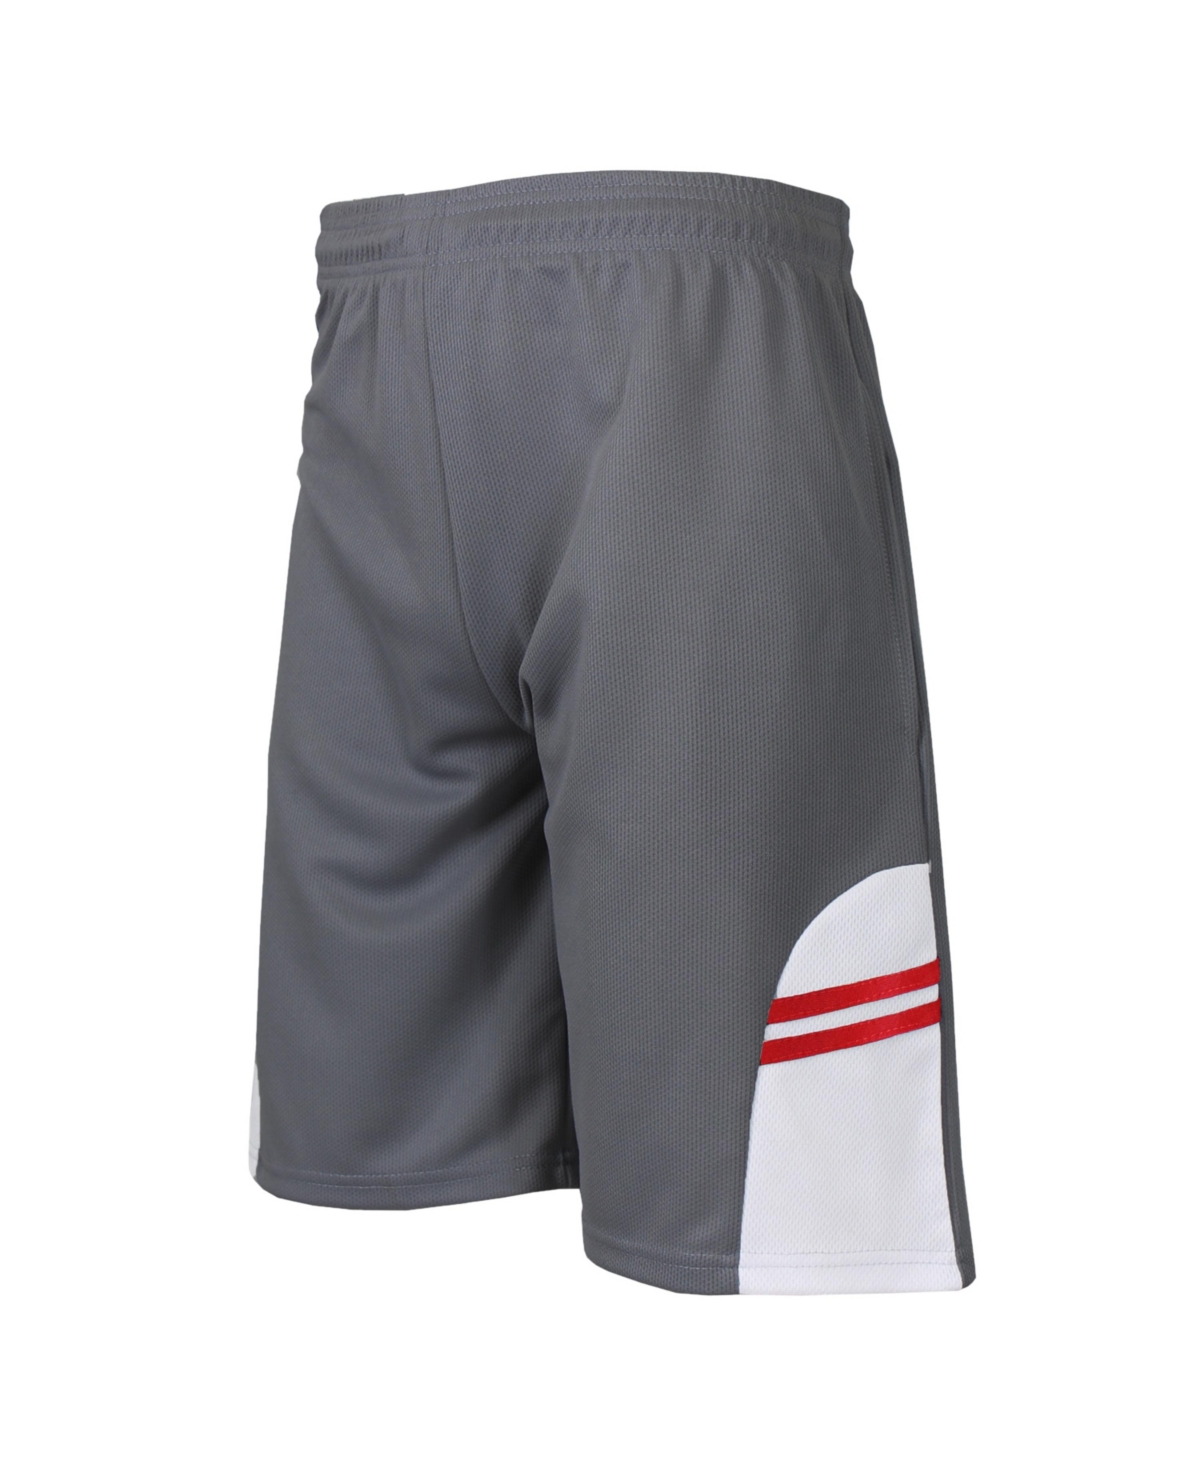 Men's Moisture Wicking Shorts with Side Trim Design - Navy